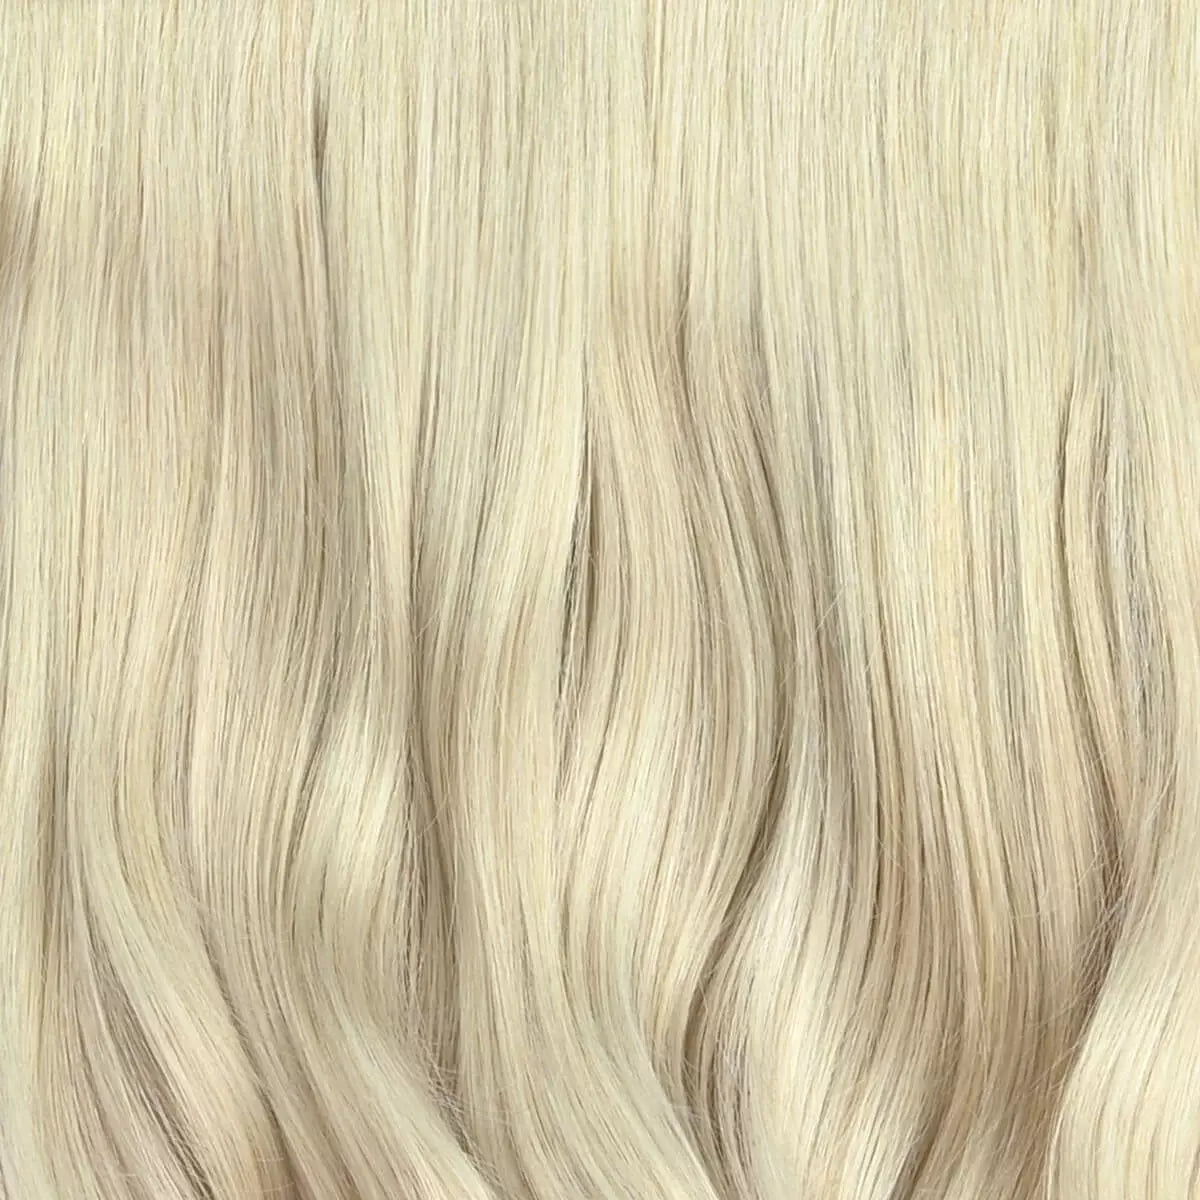 As blonde, ice koele silver kleurige paardestaart van echt haar.